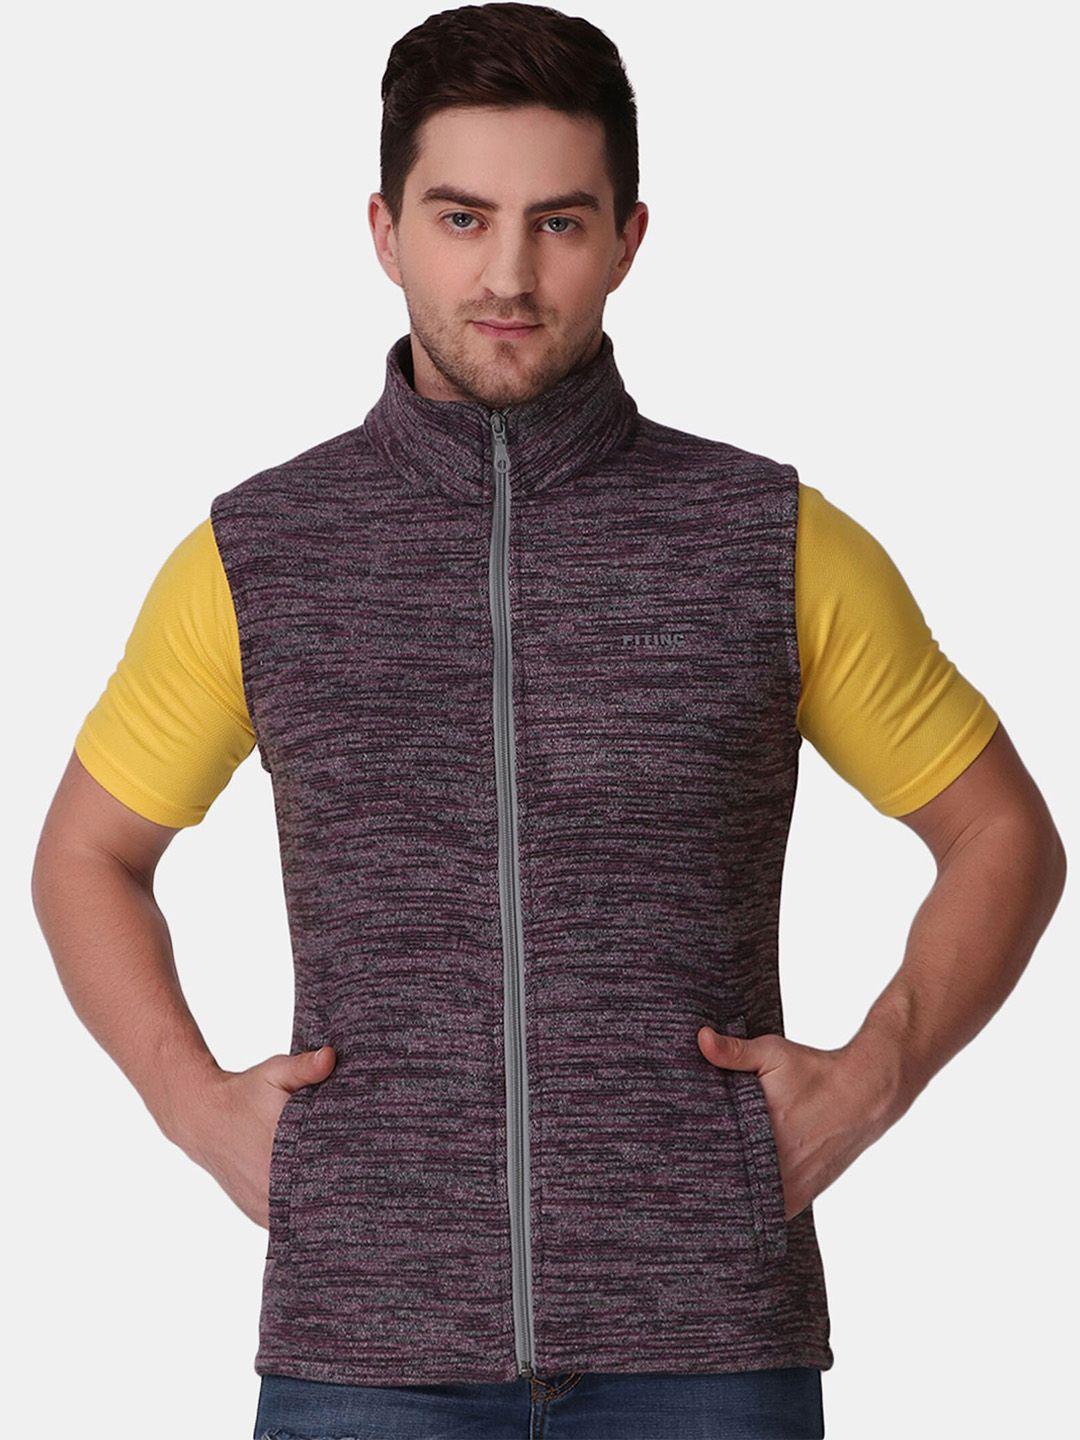 fitinc men purple striped fleece e-dry technology tailored jacket